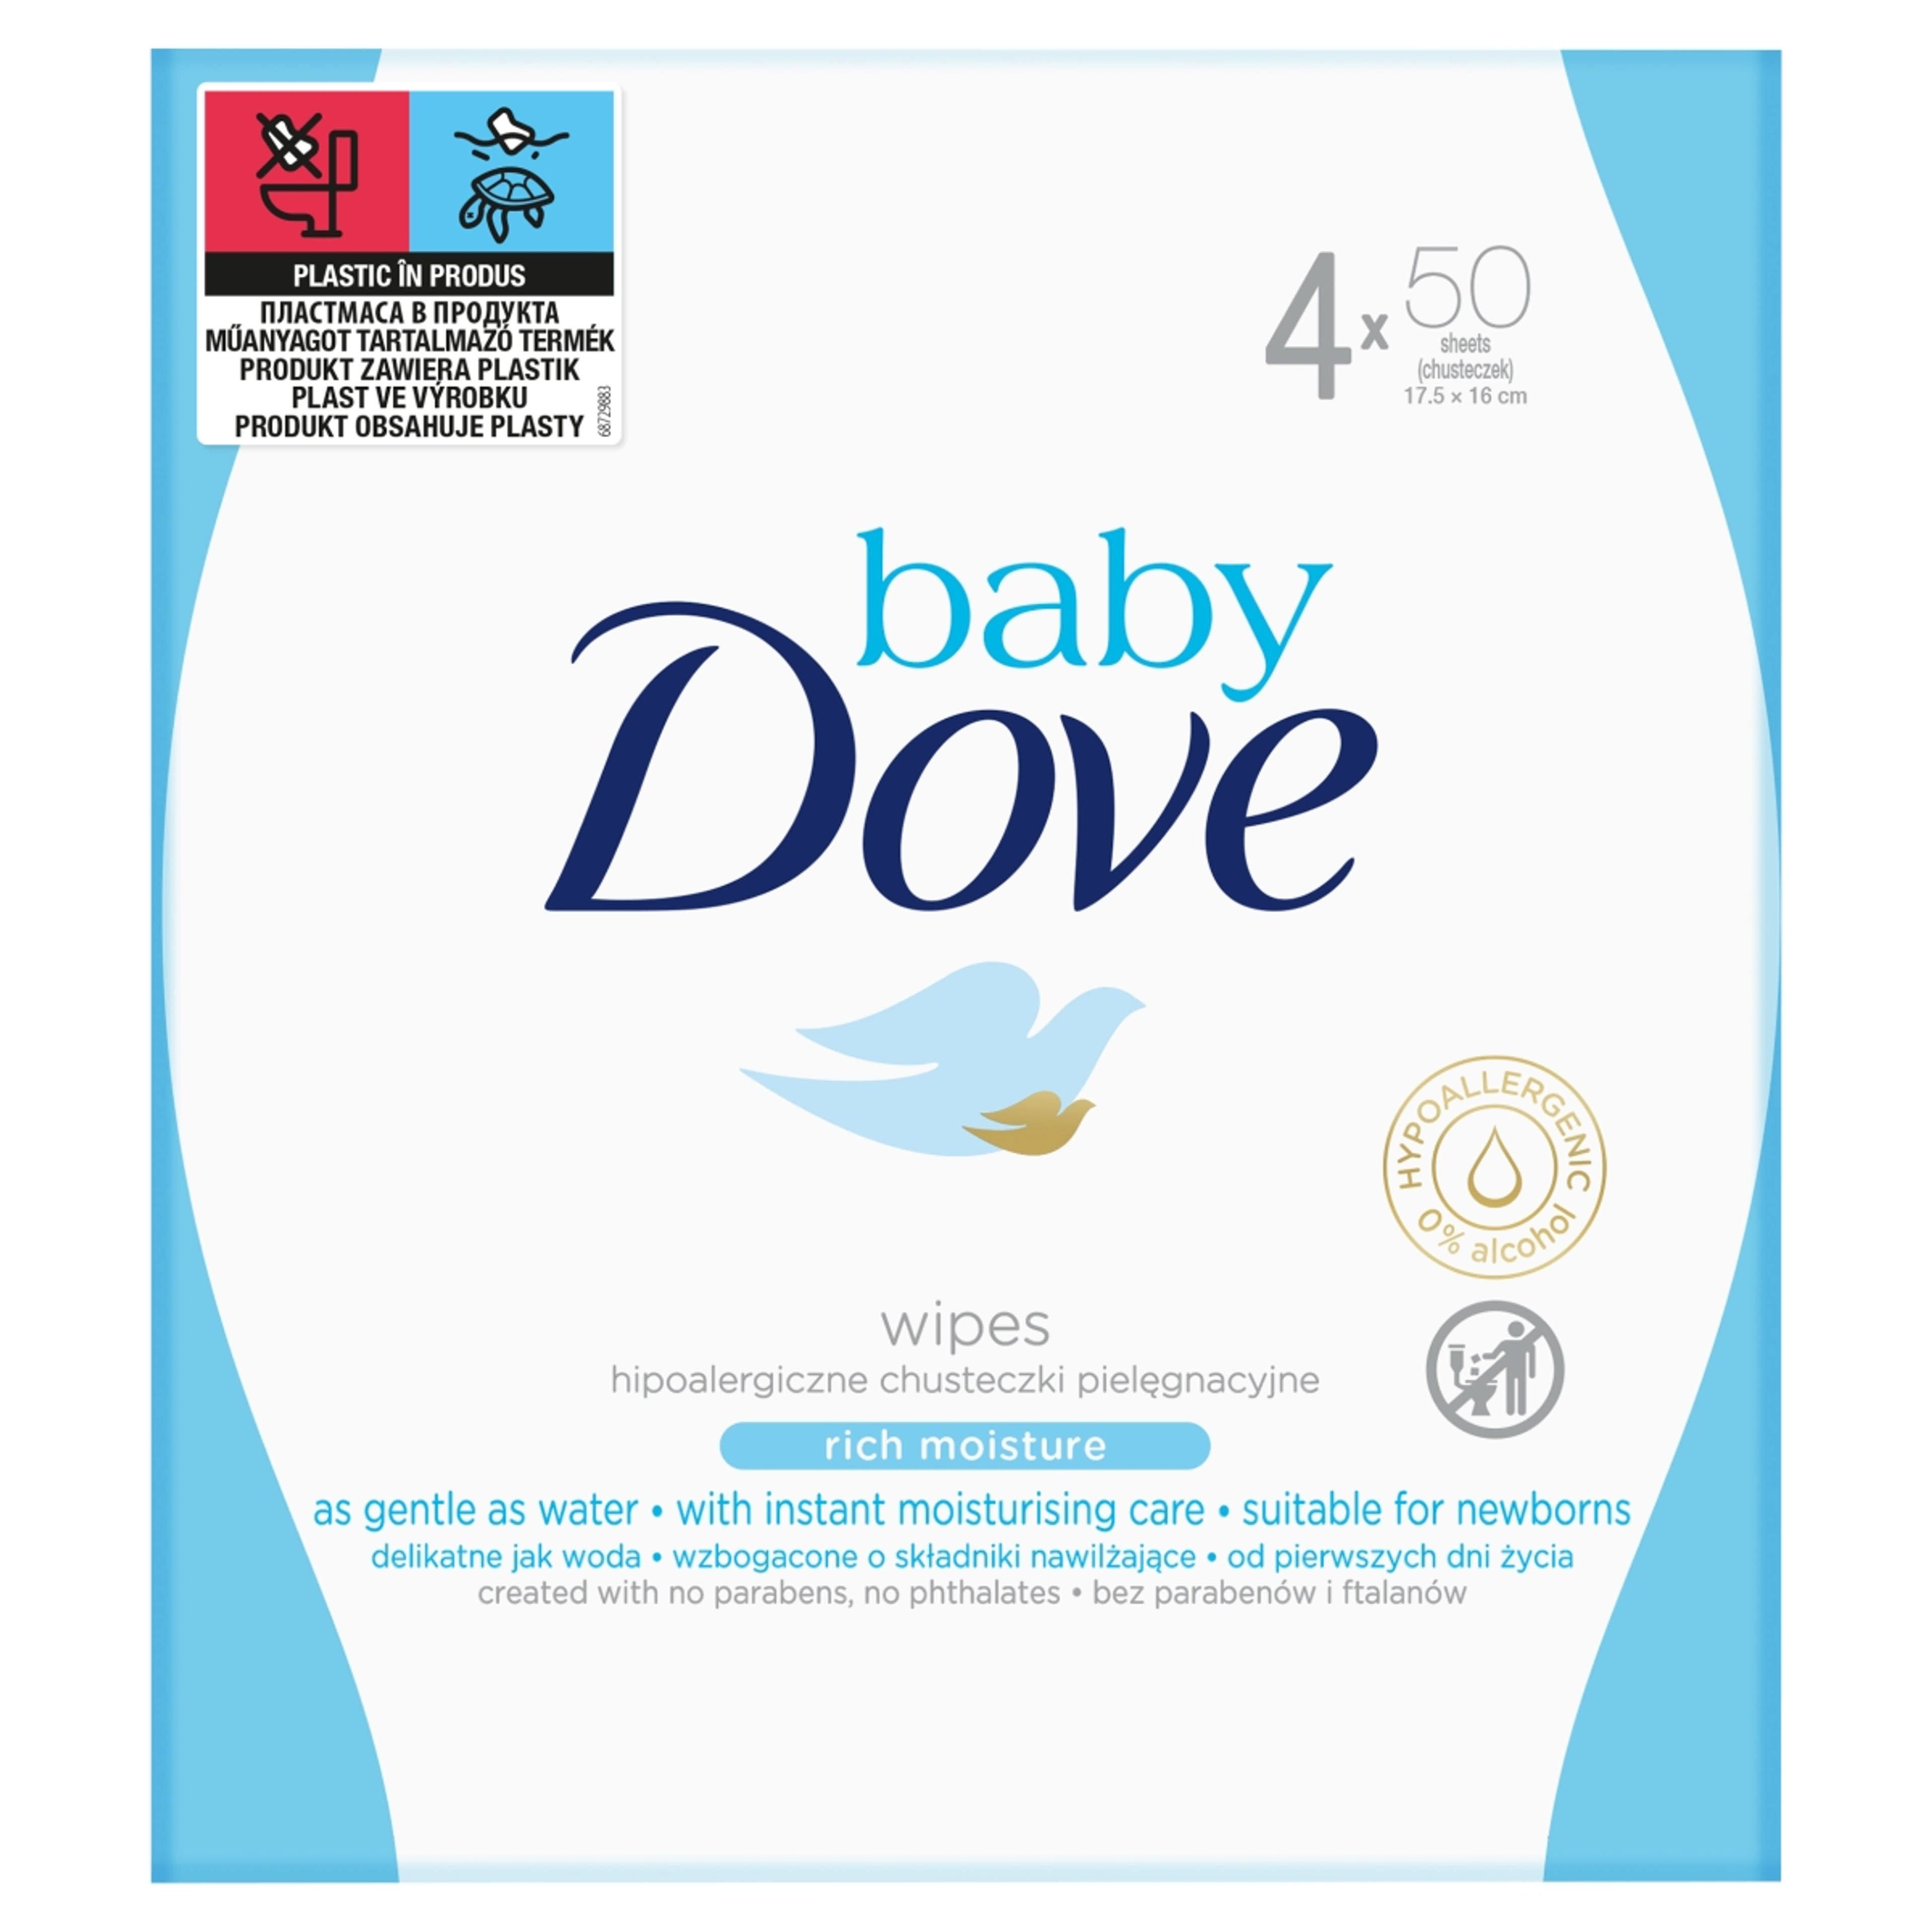 Dove Baby törlőkendő (4*50) - 1 db-1